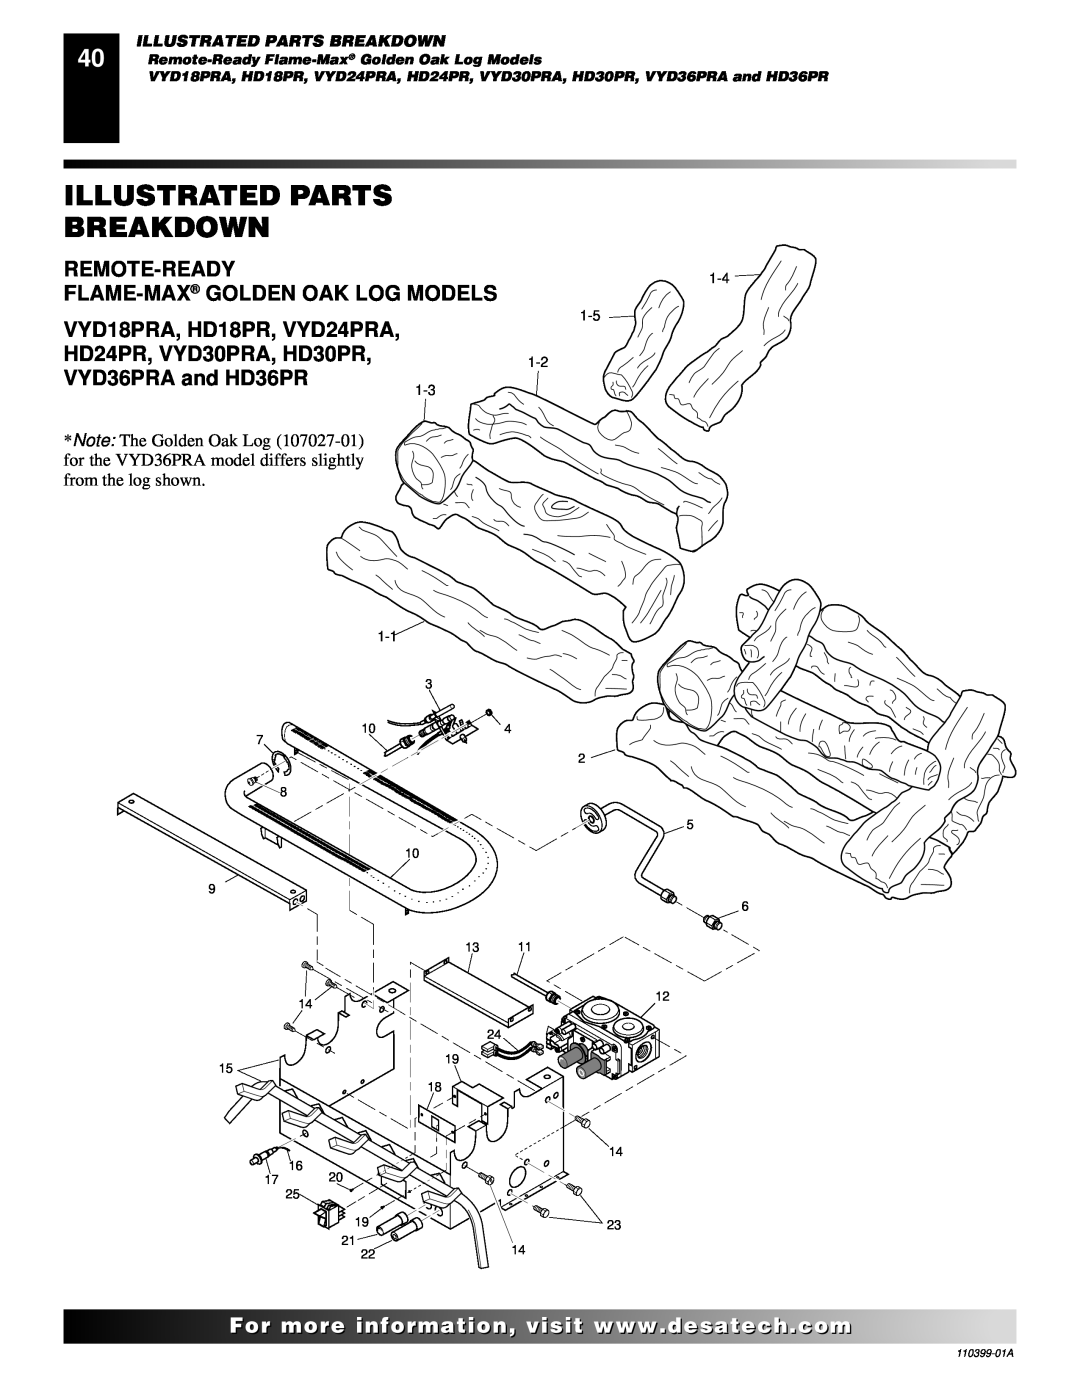 Desa FLAME-MAX Golden, FLAME-MAX Vintage Remote-Ready, Illustrated Parts Breakdown, Flame-Max Golden Oak Log Models 